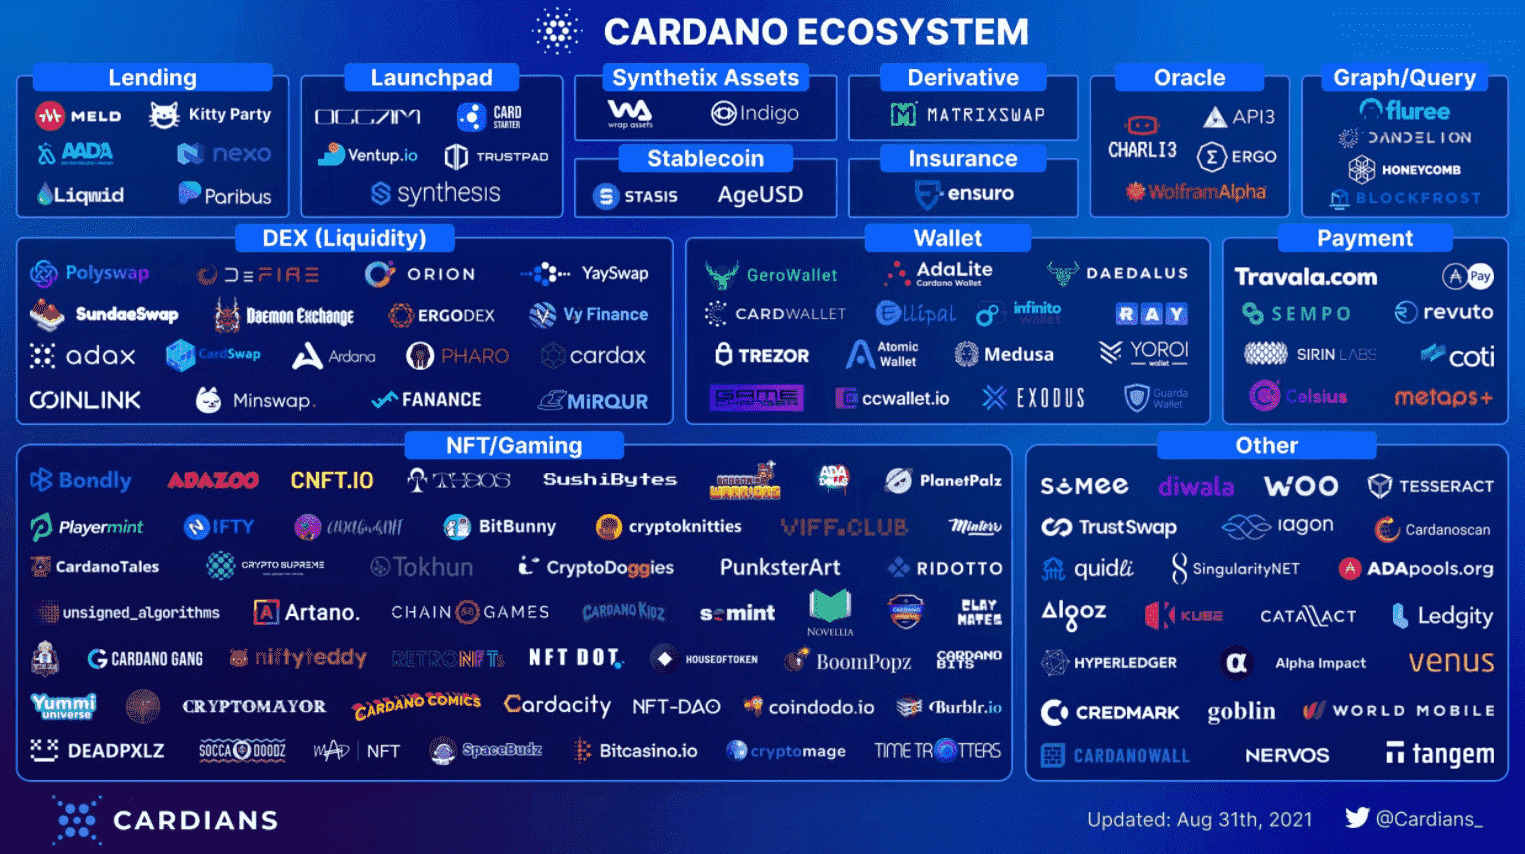 Cardano ecosystem